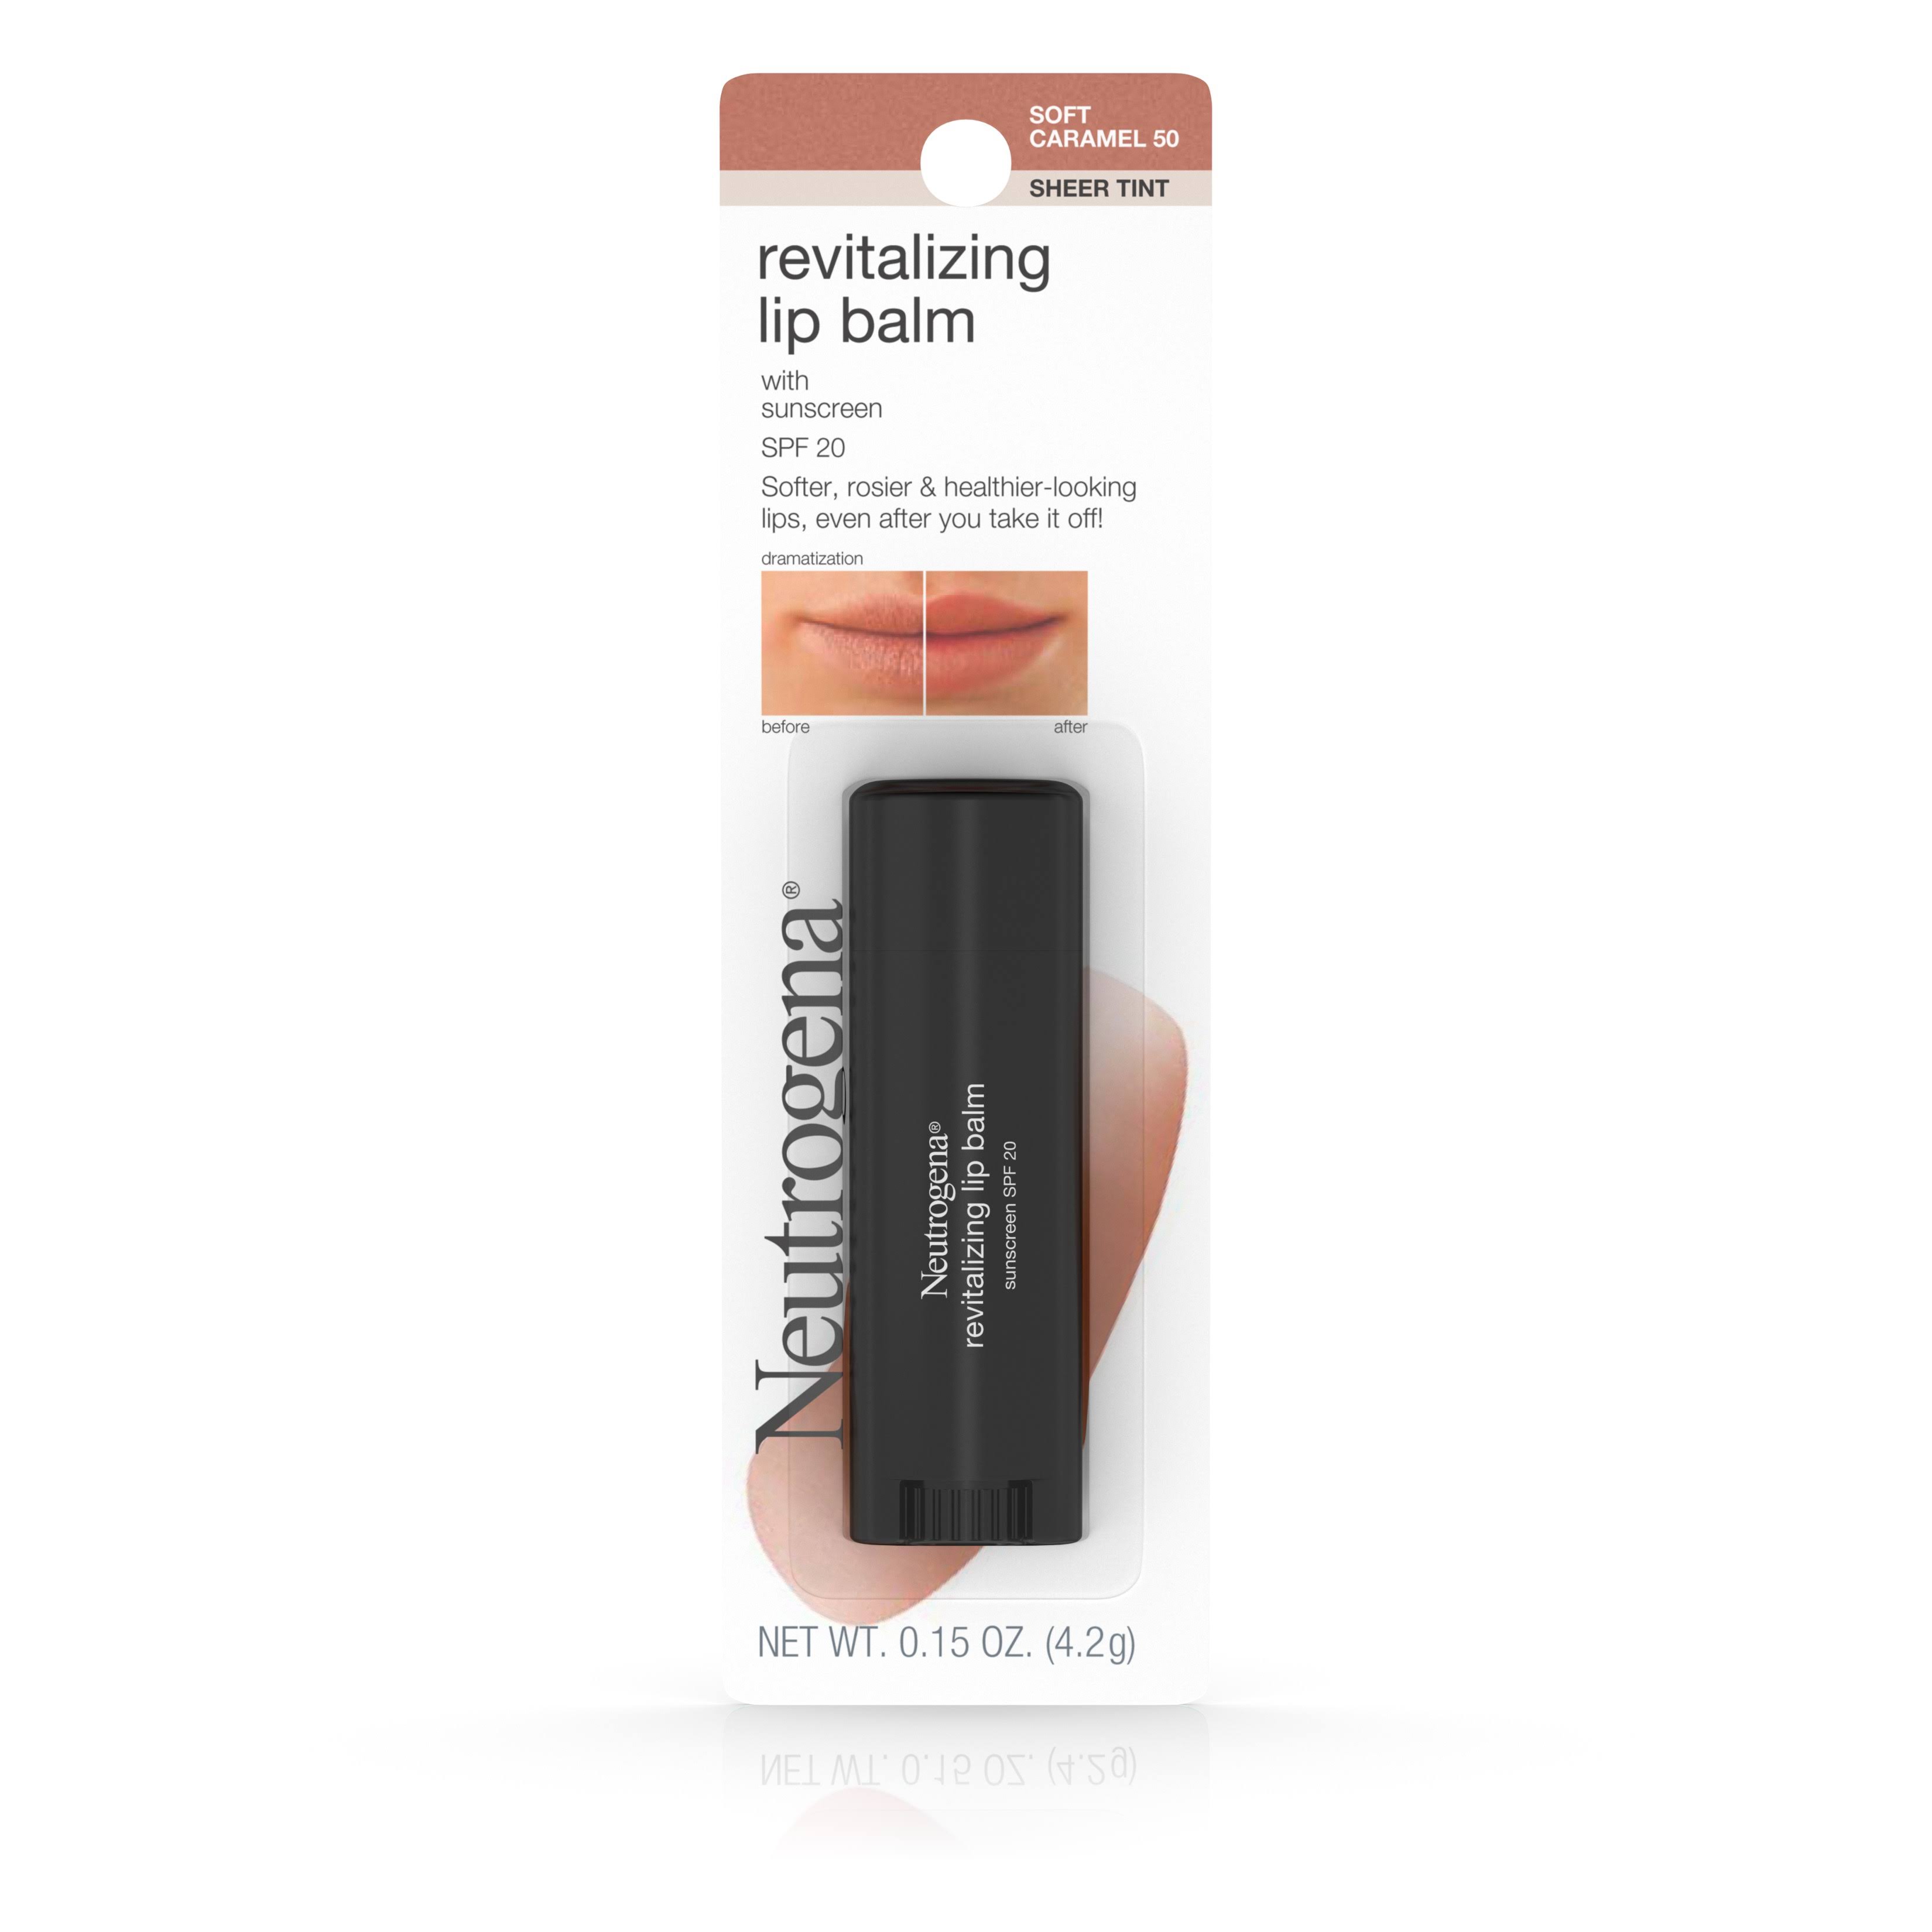 Neutrogena Sheer Tint Revitalizing Lip Balm - 4.2g, 50 Soft Caramel